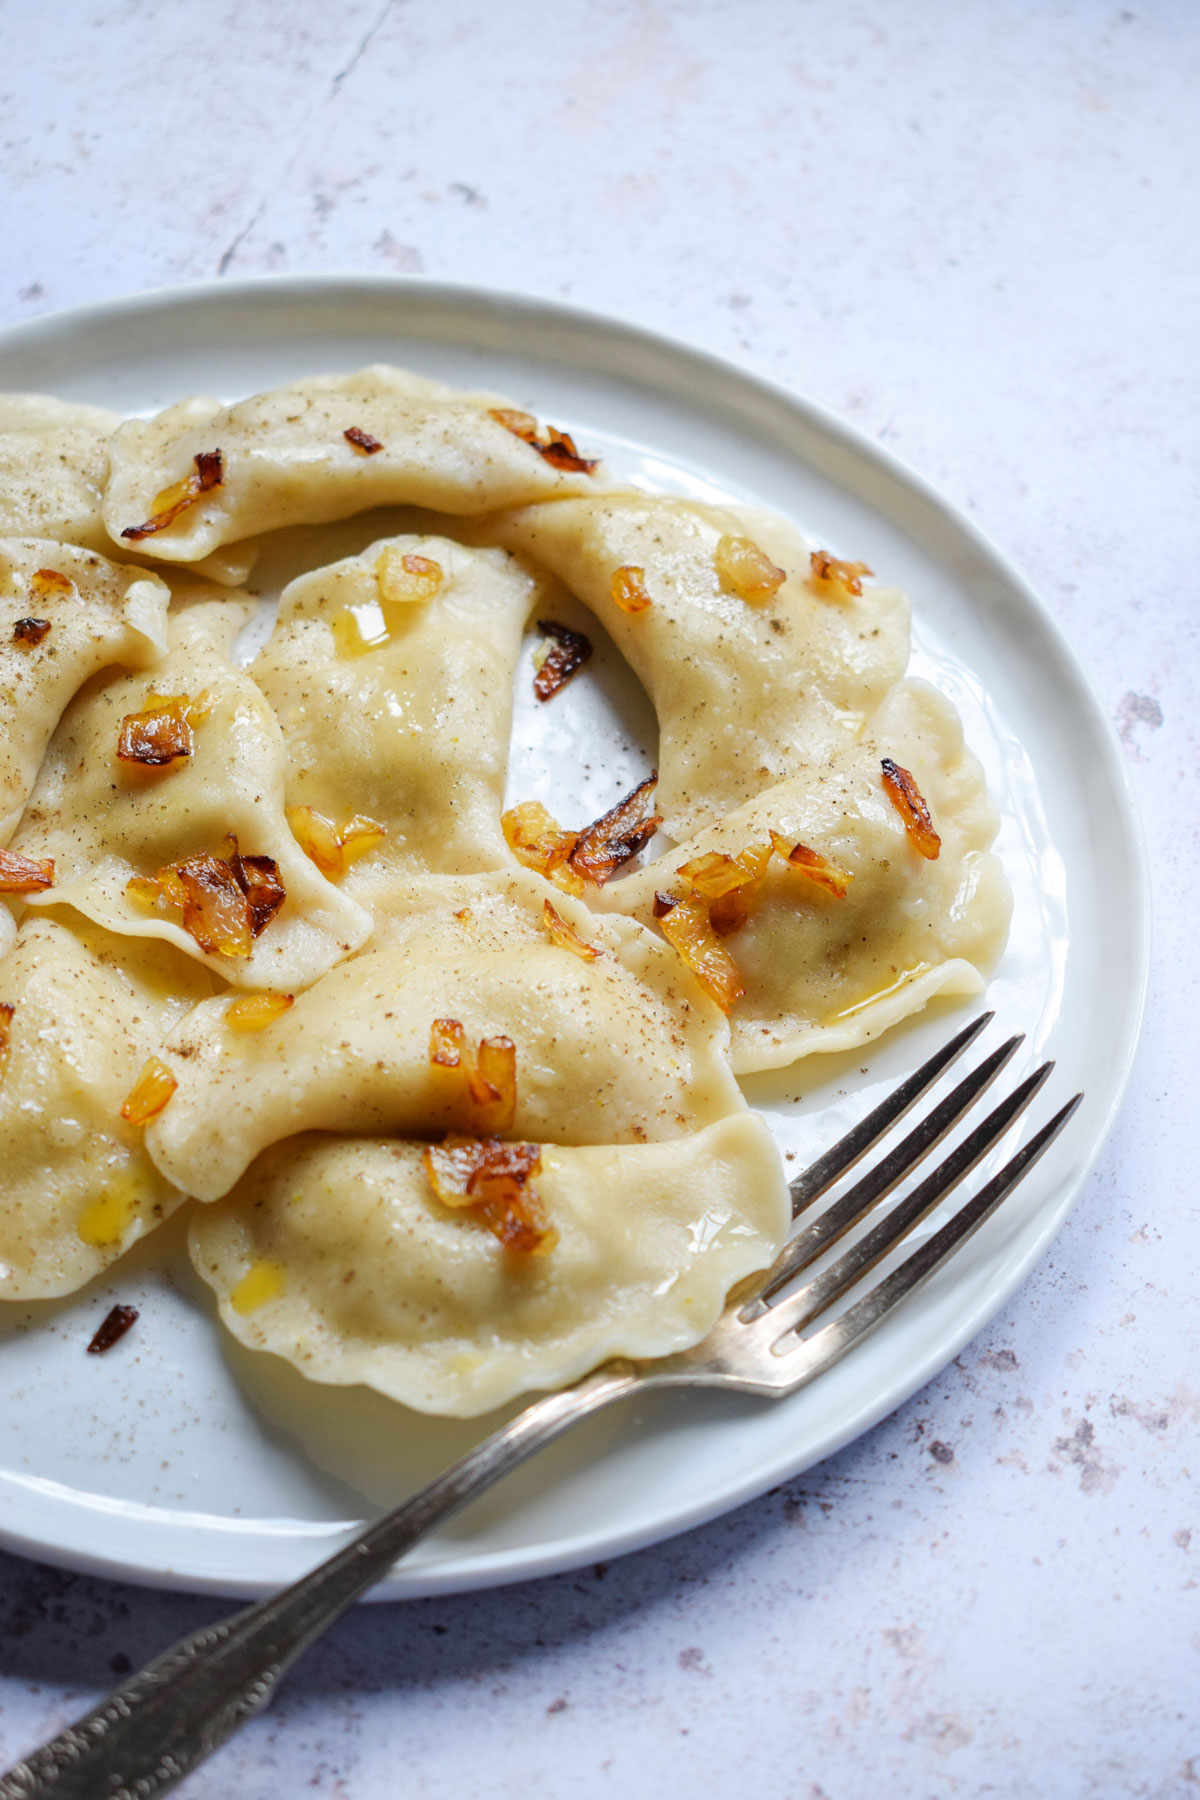 Pierogi - Vegan Potato and Cheese Stuffed Dumplings - Let's Eat Smart